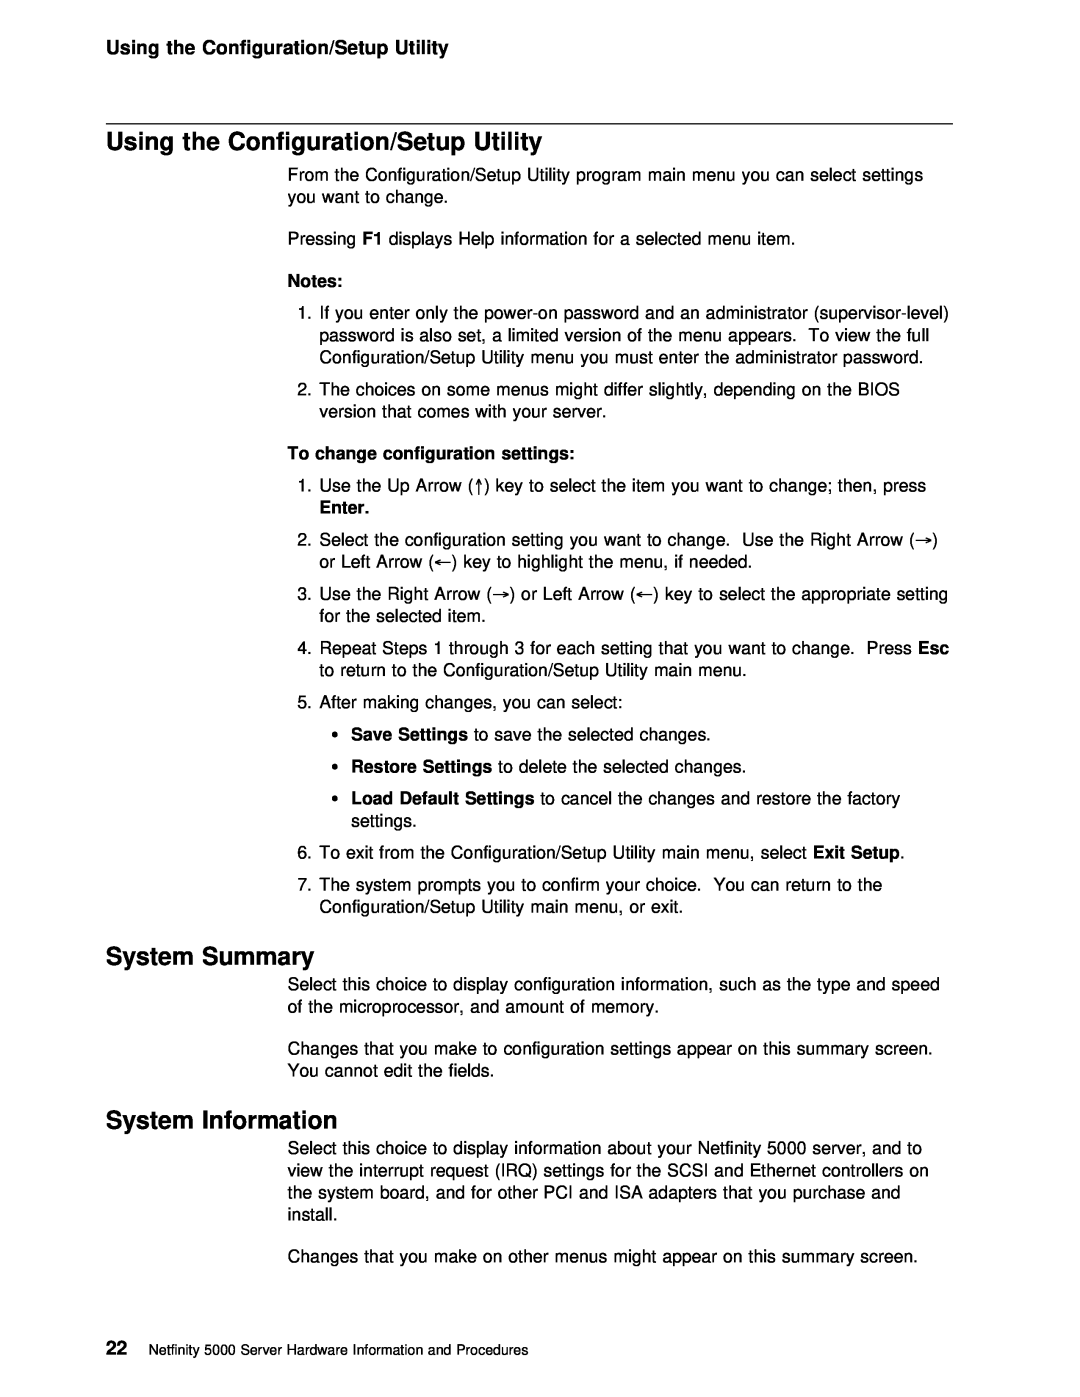 IBM 5000 manual System Summary, System Information, Using the Configuration/Setup Utility 